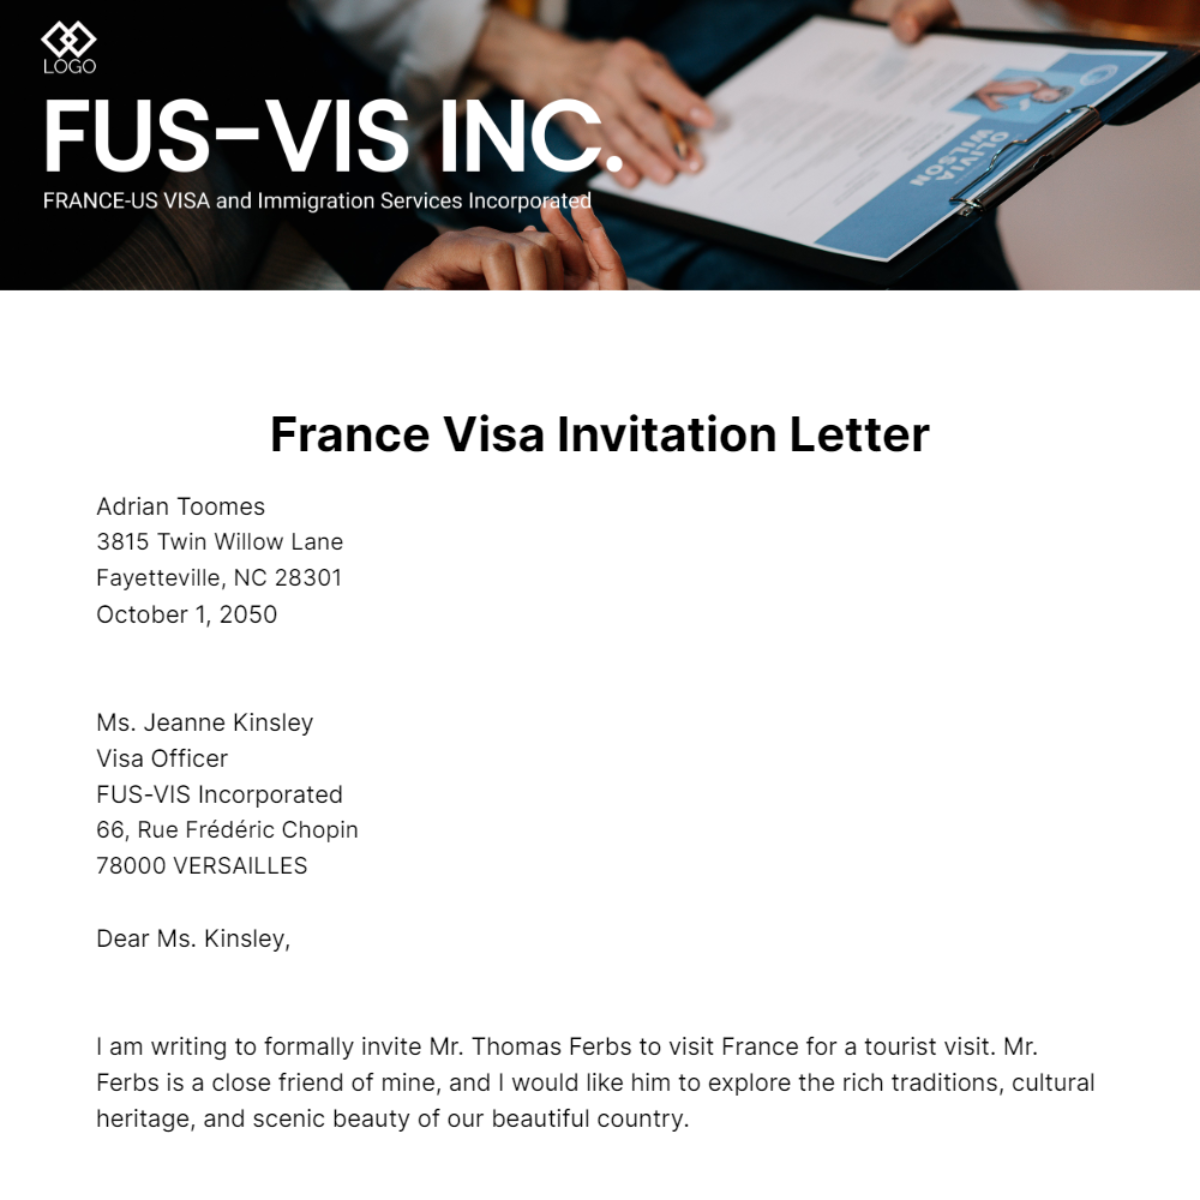 France Visa Invitation Letter Template